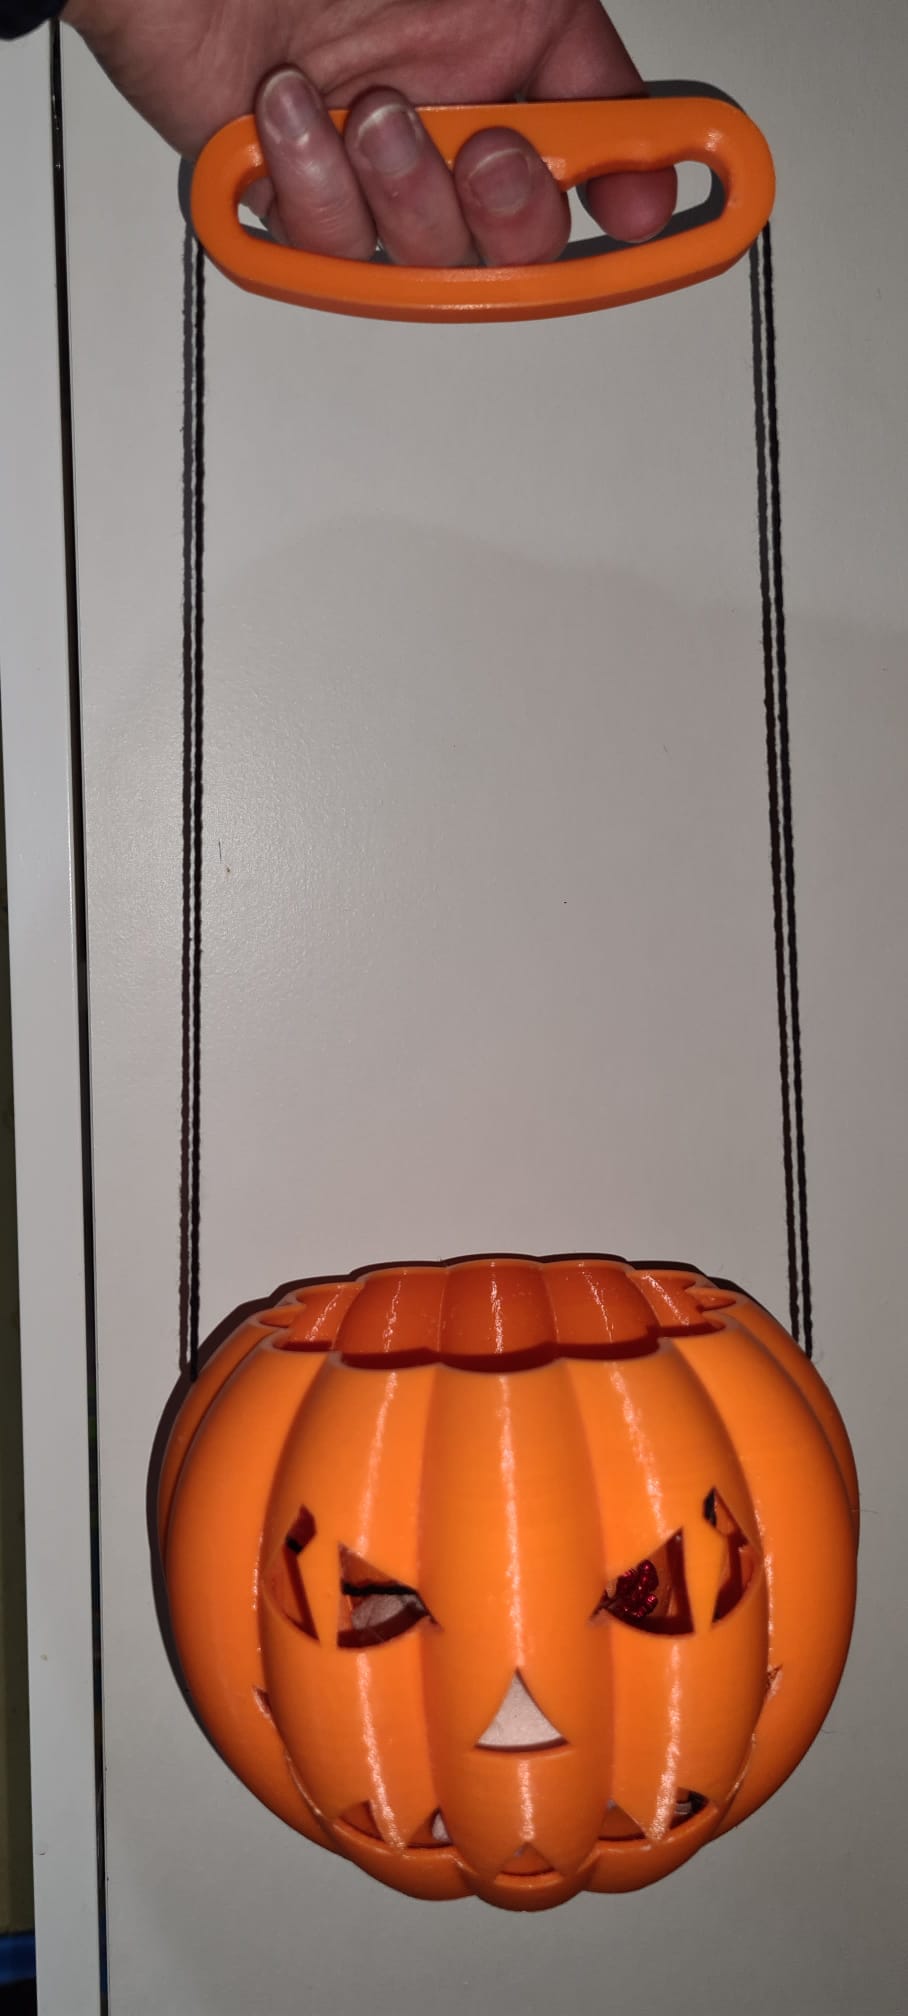 Pumpkin basket with string holes